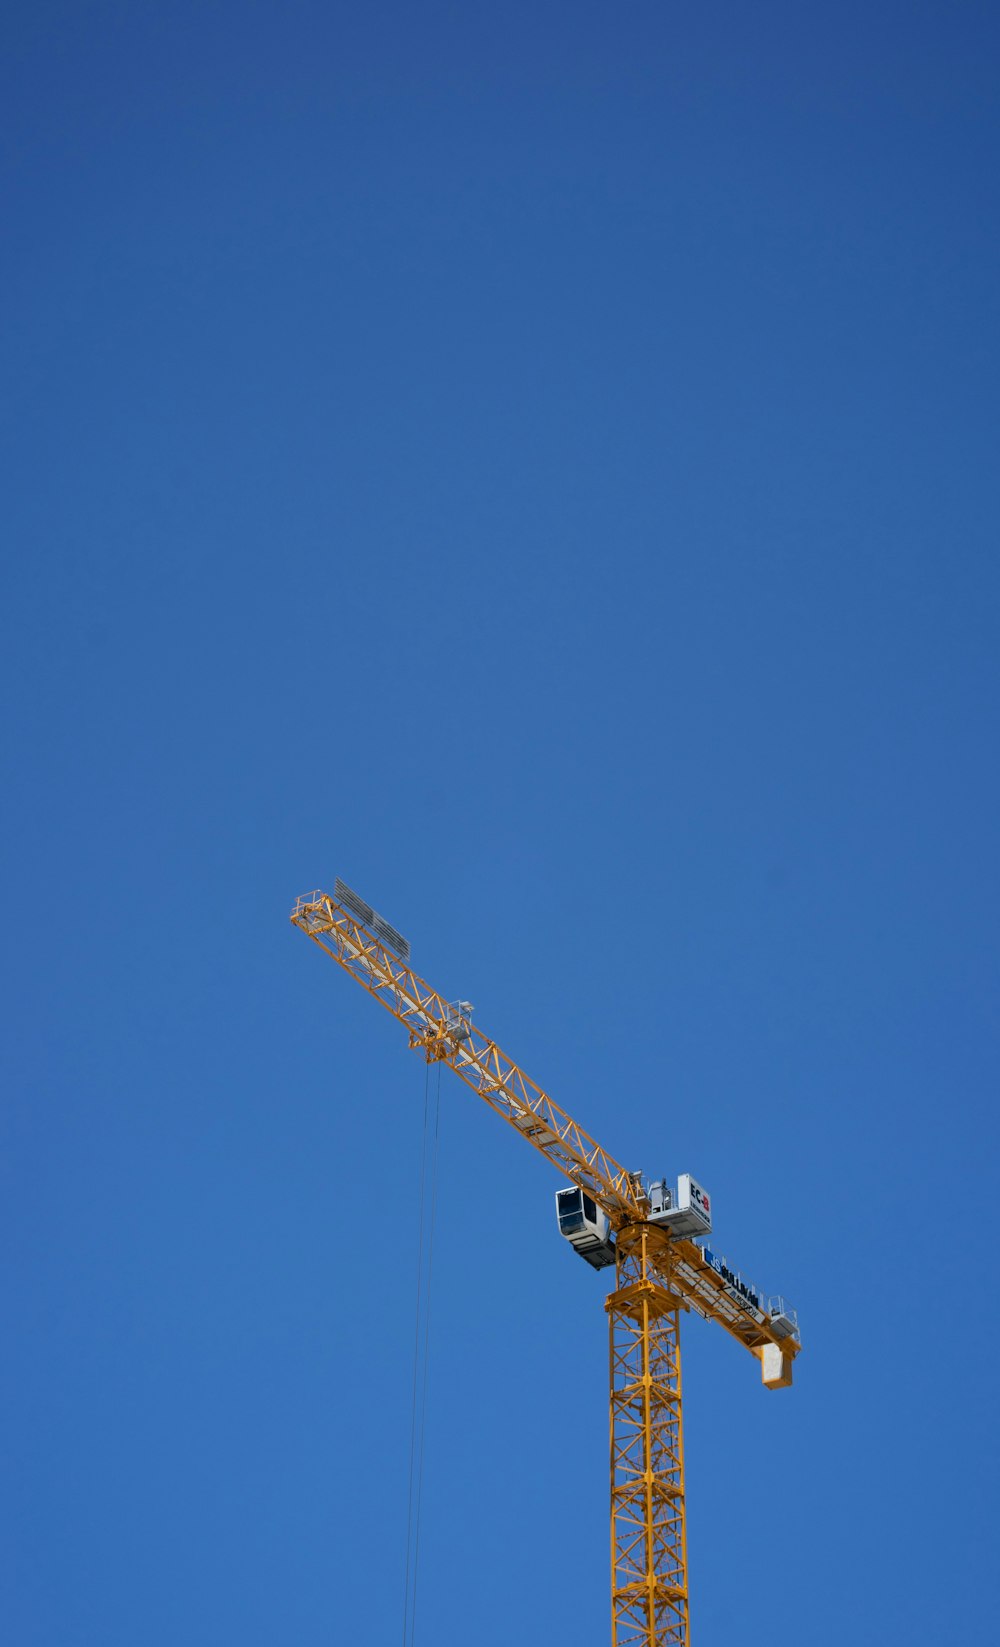 brown and black crane under blue sky during daytime